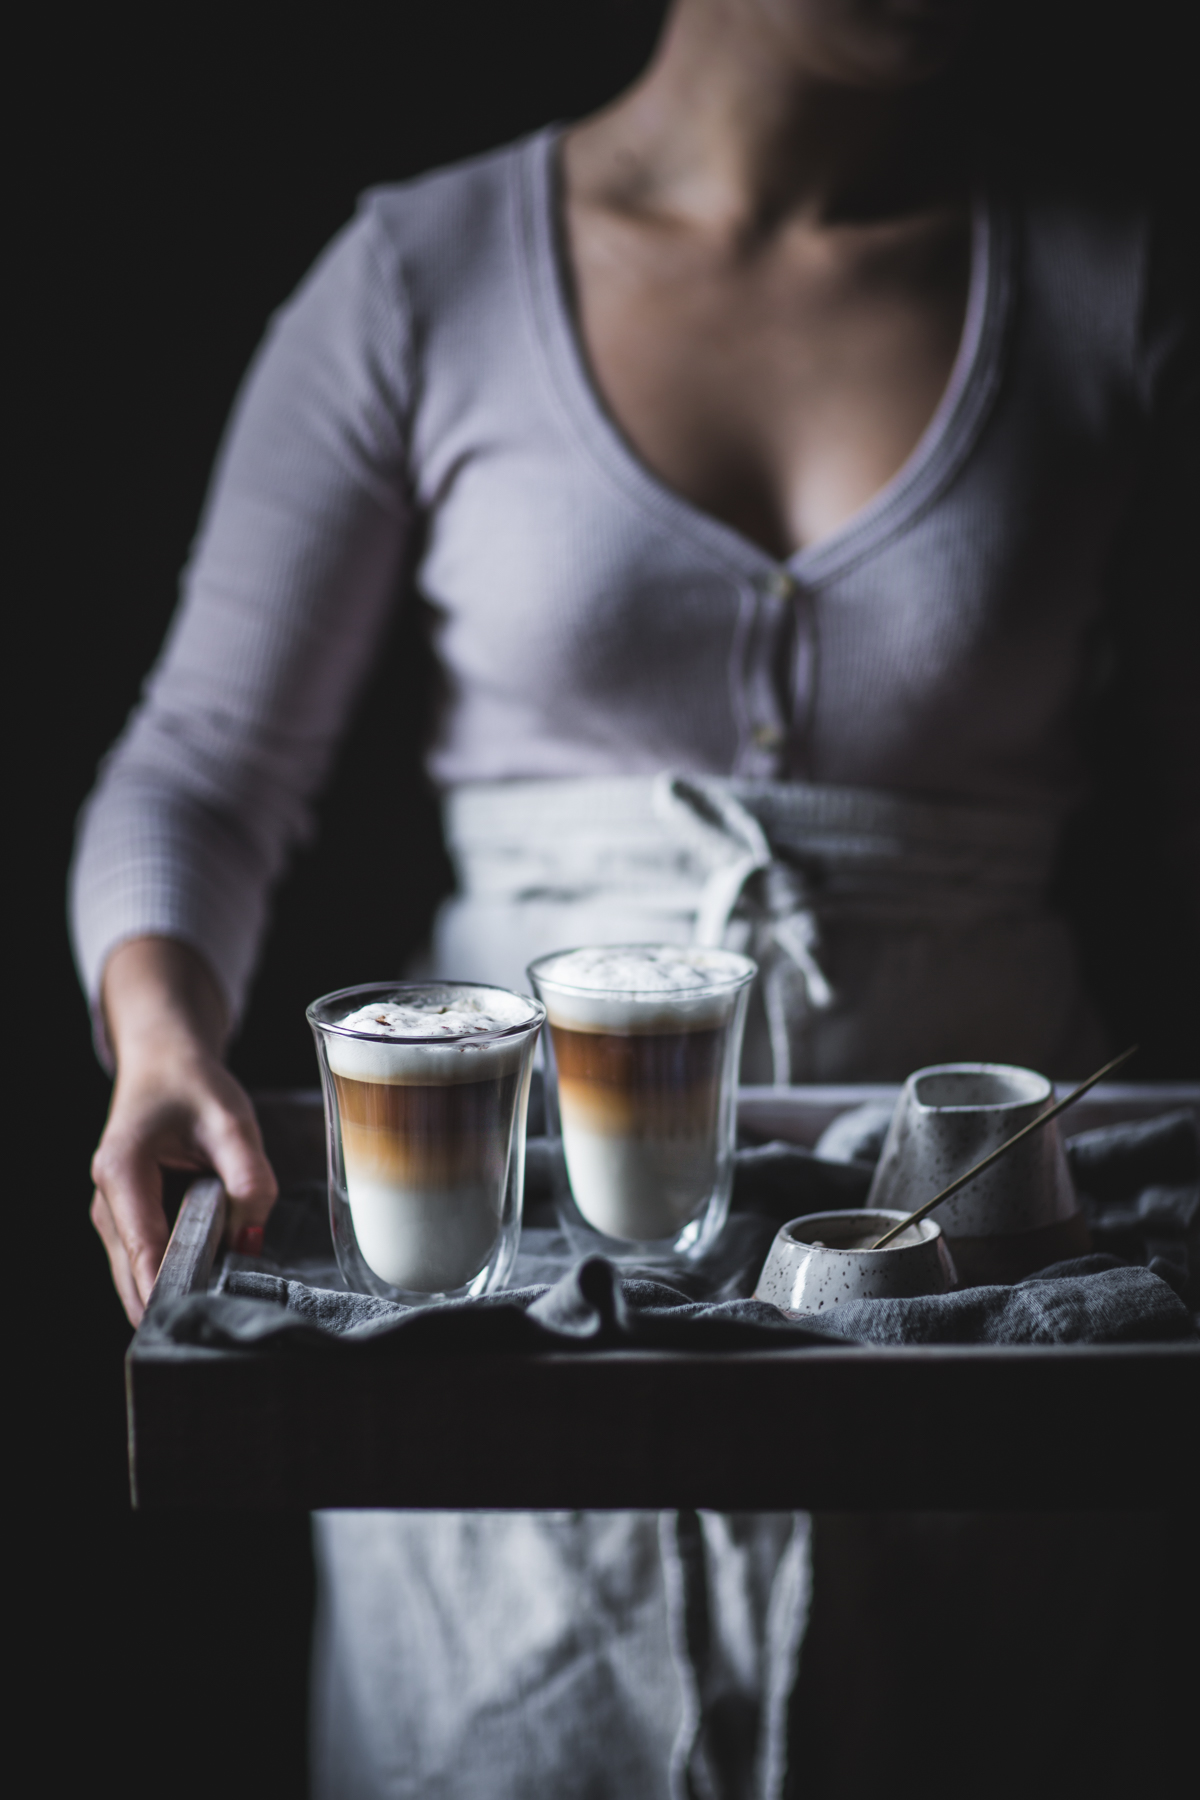 https://adventuresincooking.com/wp-content/uploads/2019/01/How-to-Make-a-Latte-at-Home-by-Eva-Kosmas-Flores-12.jpg